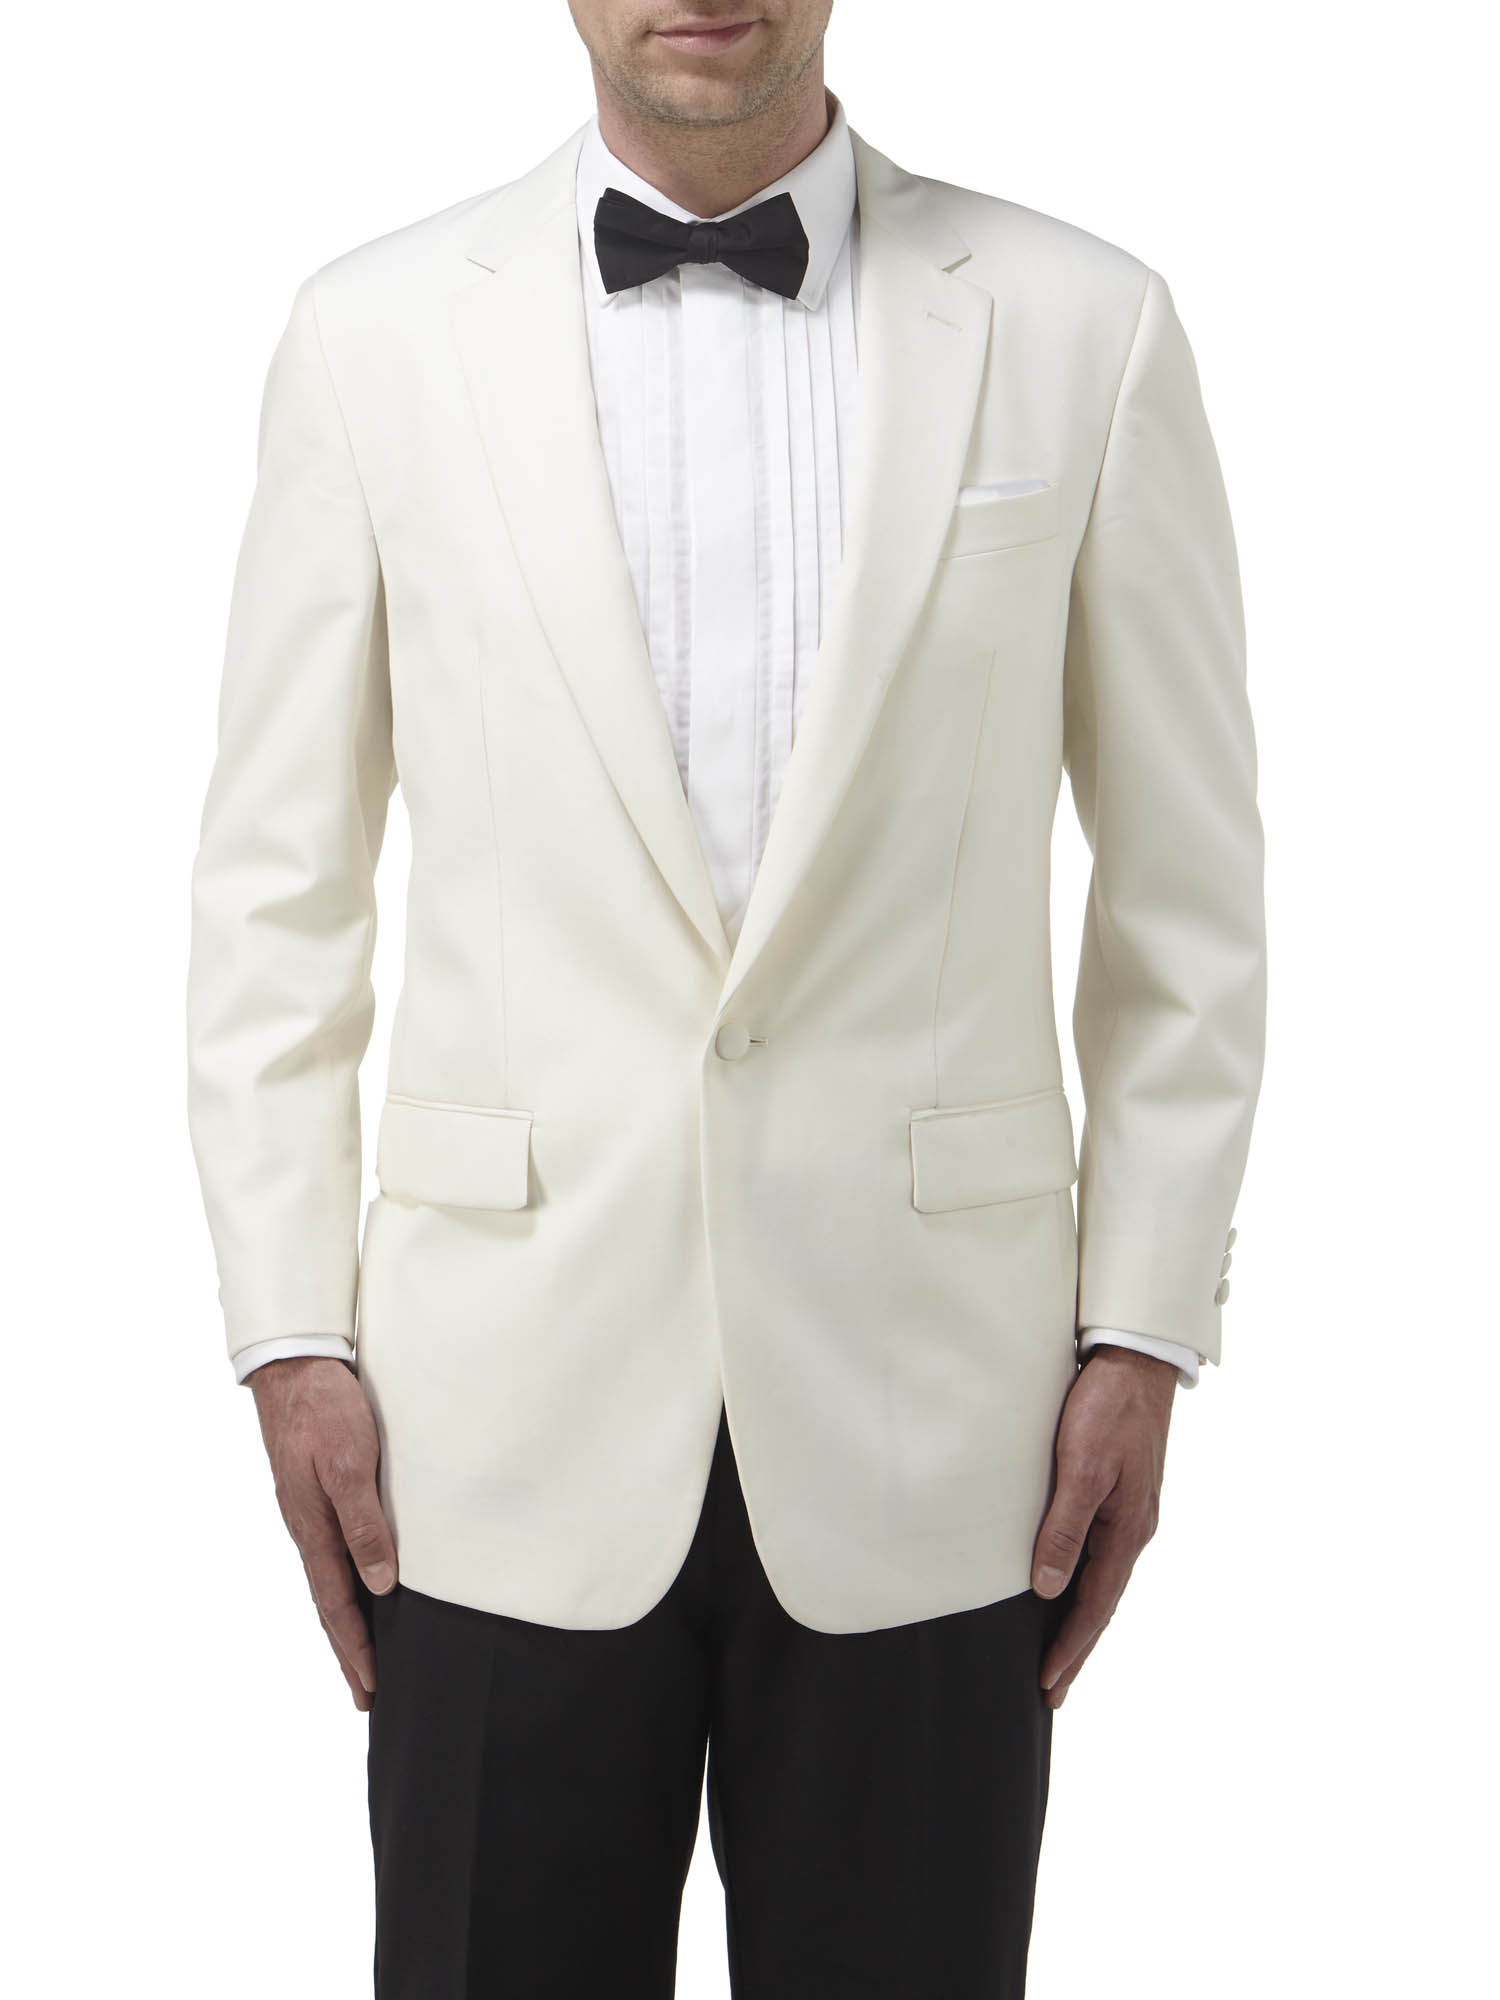 Sorrento White Tuxedo 3 piece - Tom Murphy's Formal and Menswear